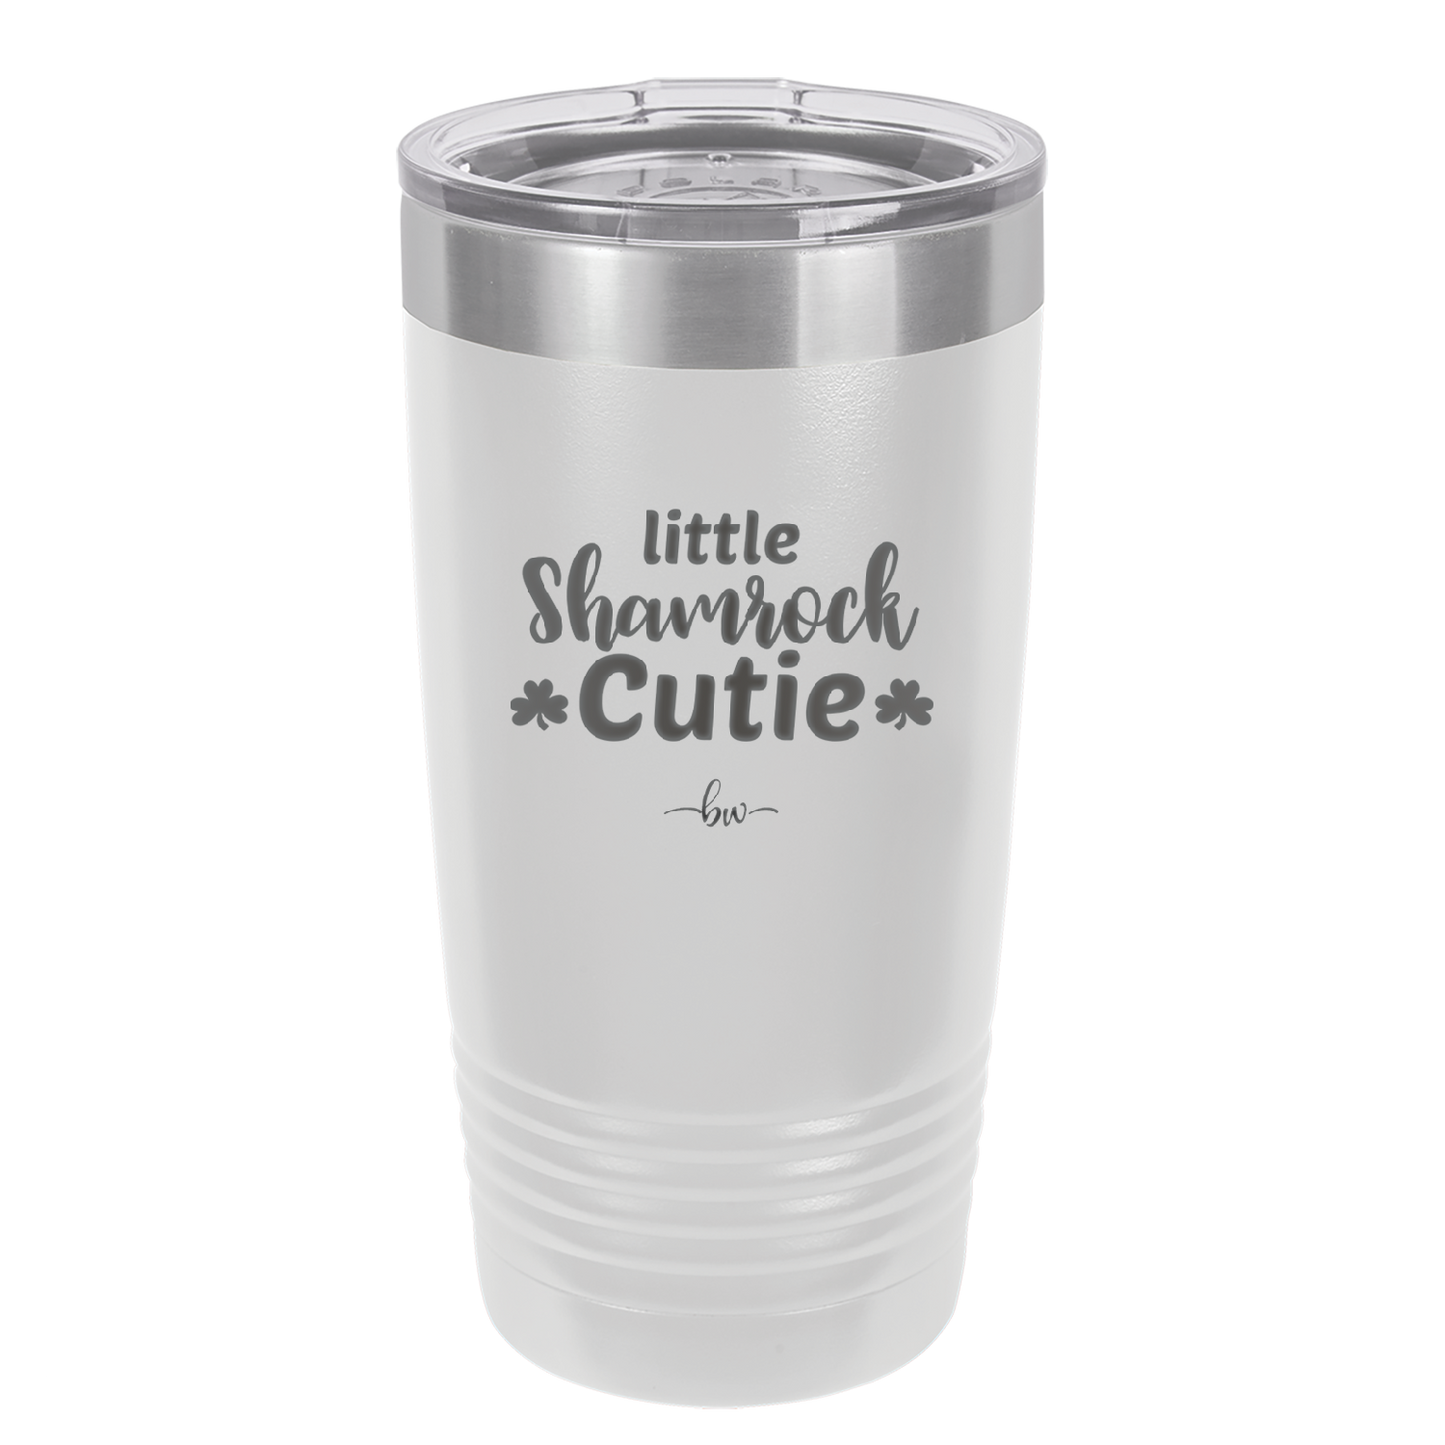 Little Shamrock Cutie - Laser Engraved Stainless Steel Drinkware - 1814 -